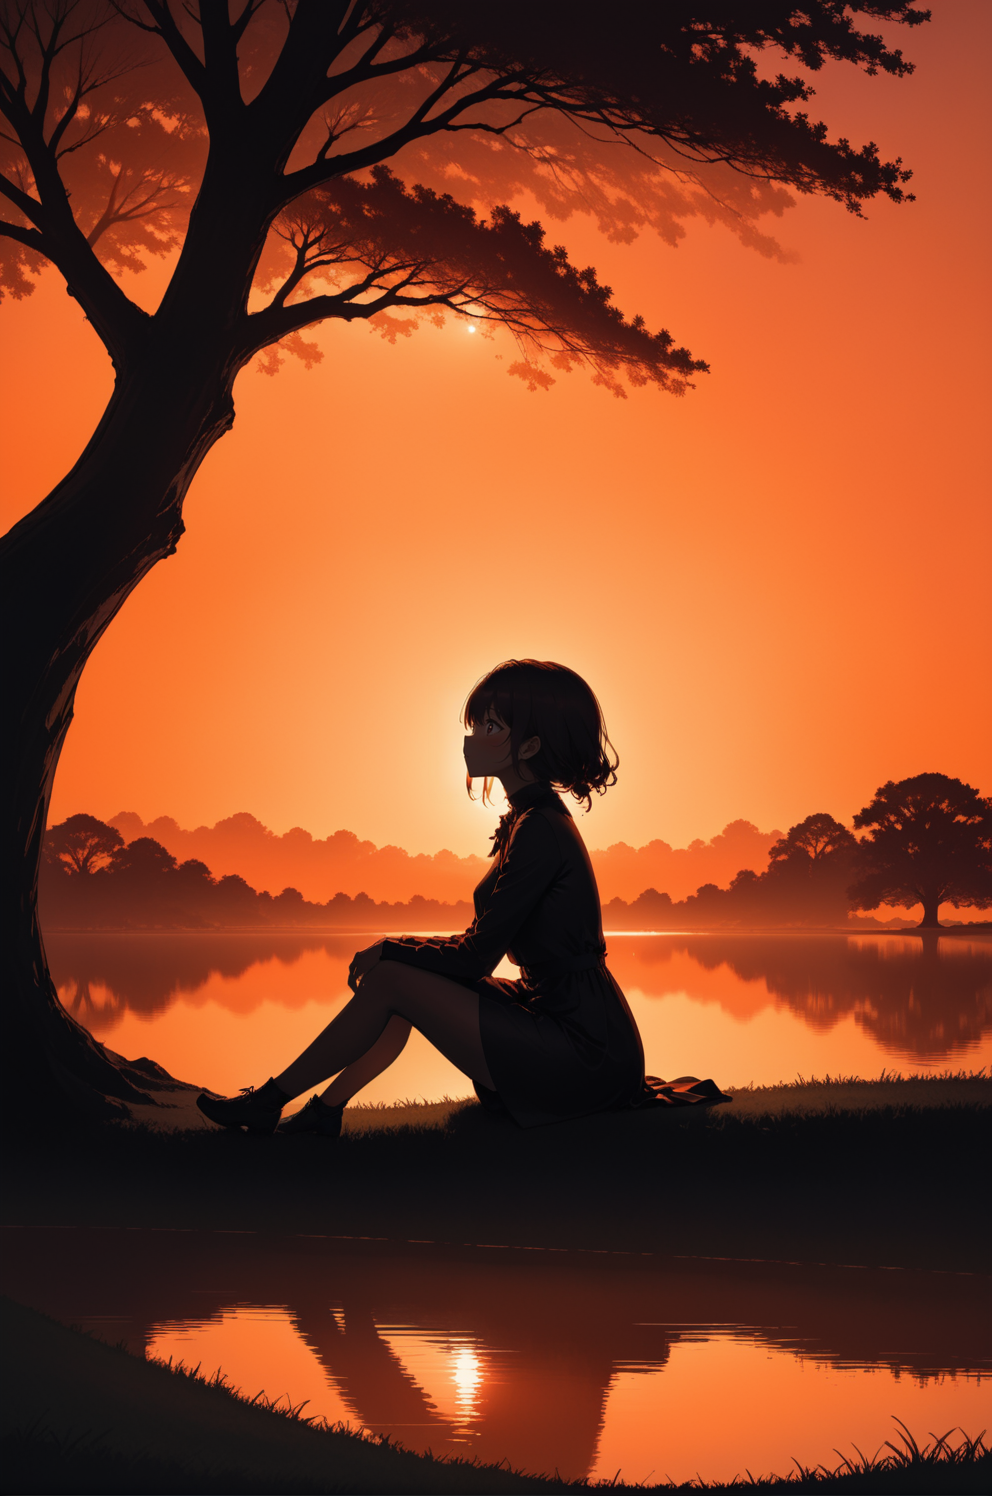 1girl, silhouette, sitting, sitting under tree, orange-red sky, evening, orange lighting